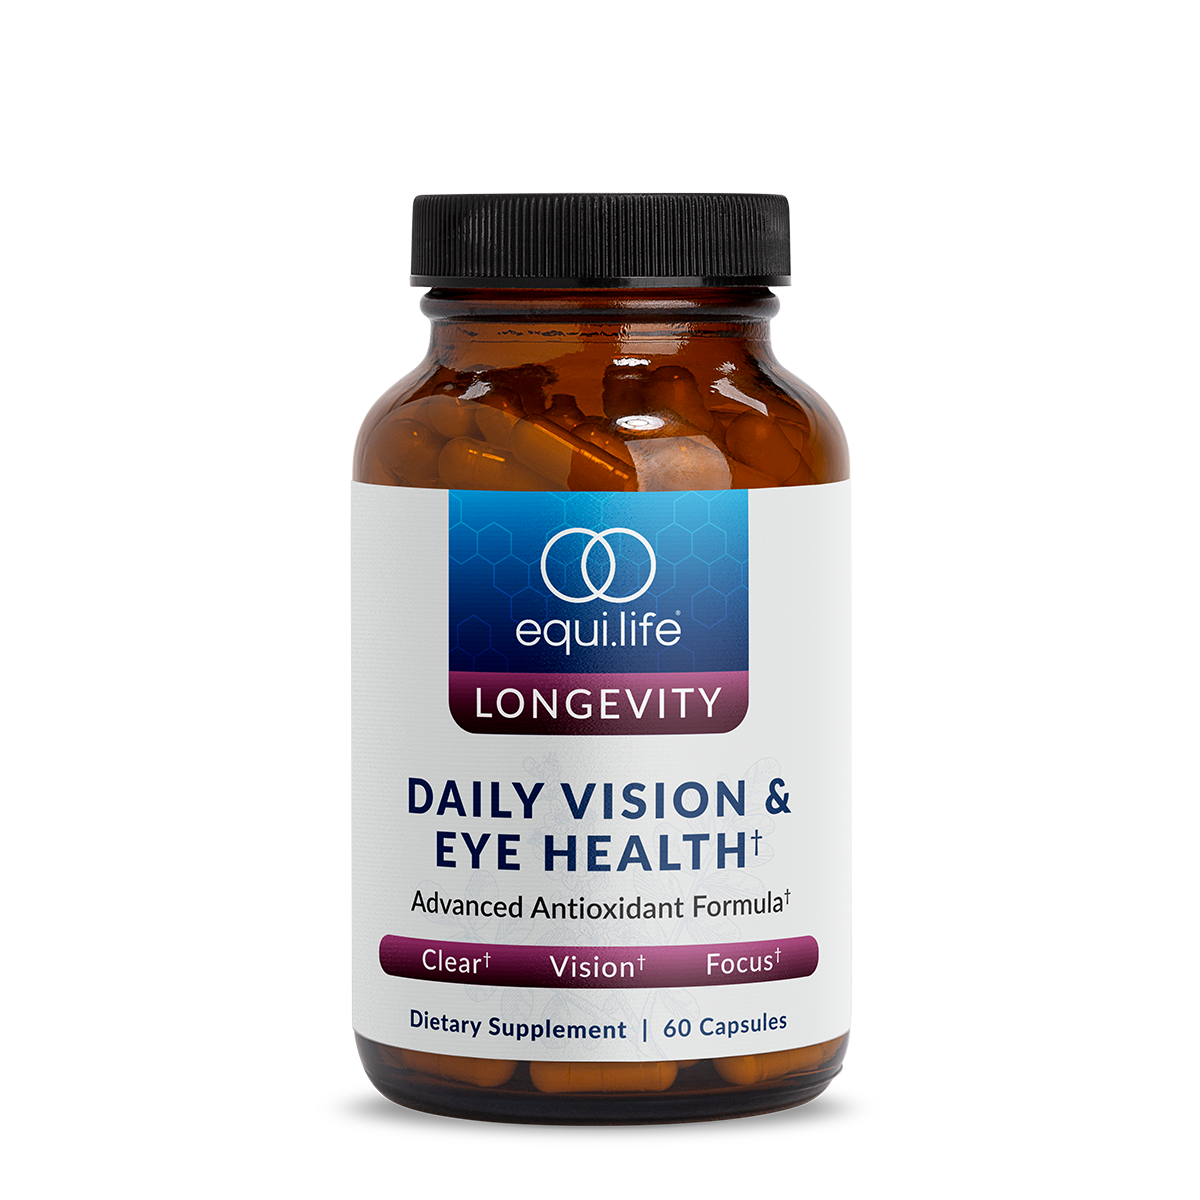 Daily Vision & Eye Health